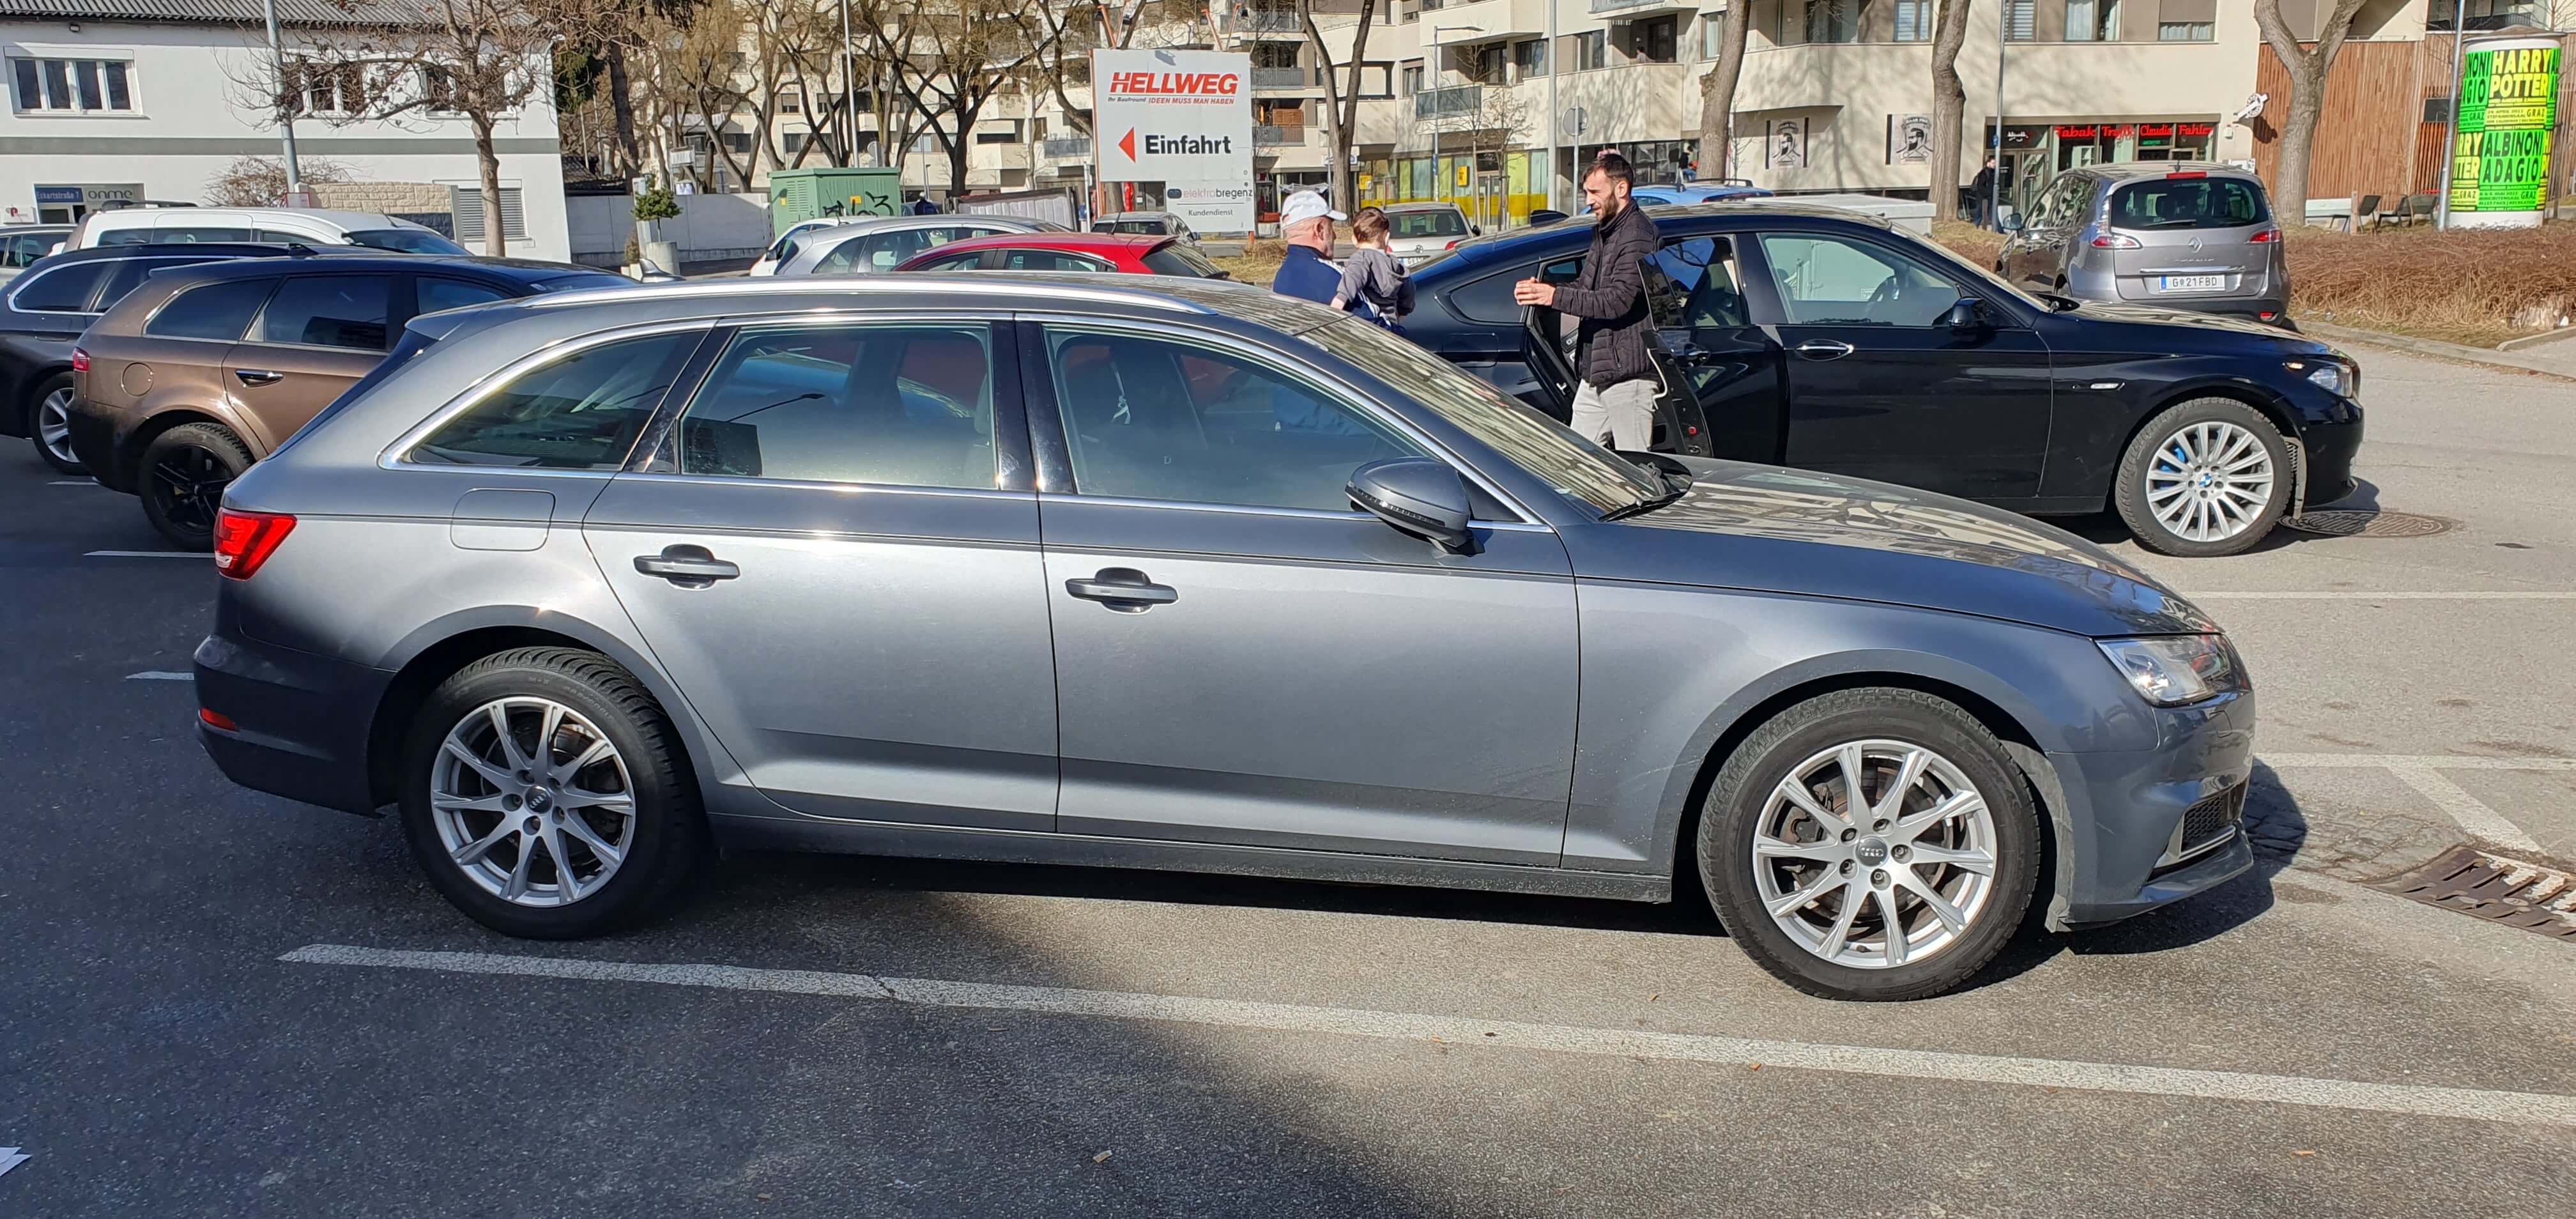 Audi A4 Avant - 9641d31f-af39-40cc-b217-990d1073a7b2